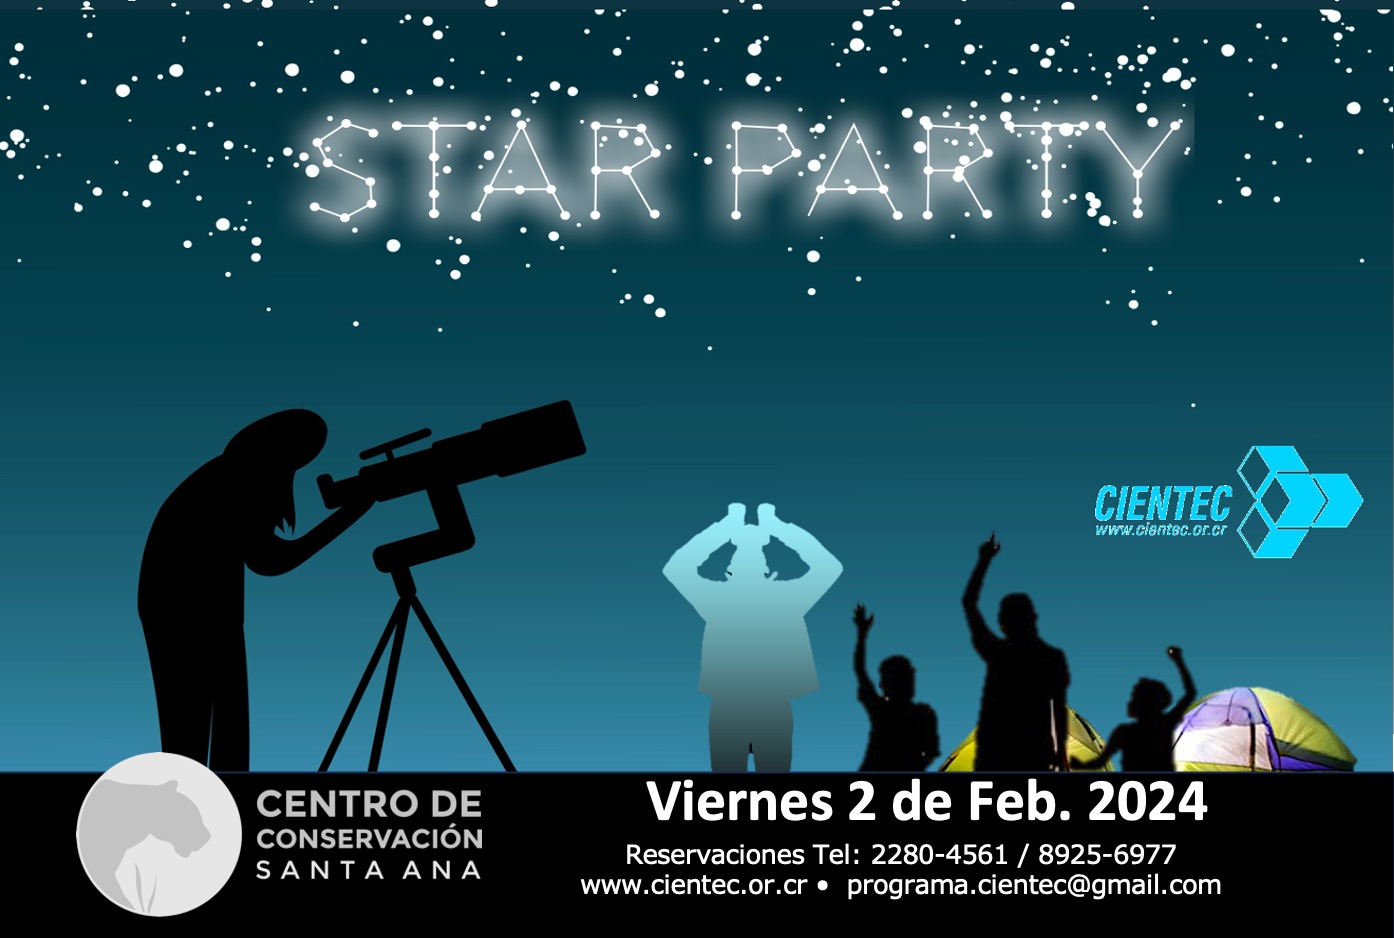 Star Party 2 Feb. 24